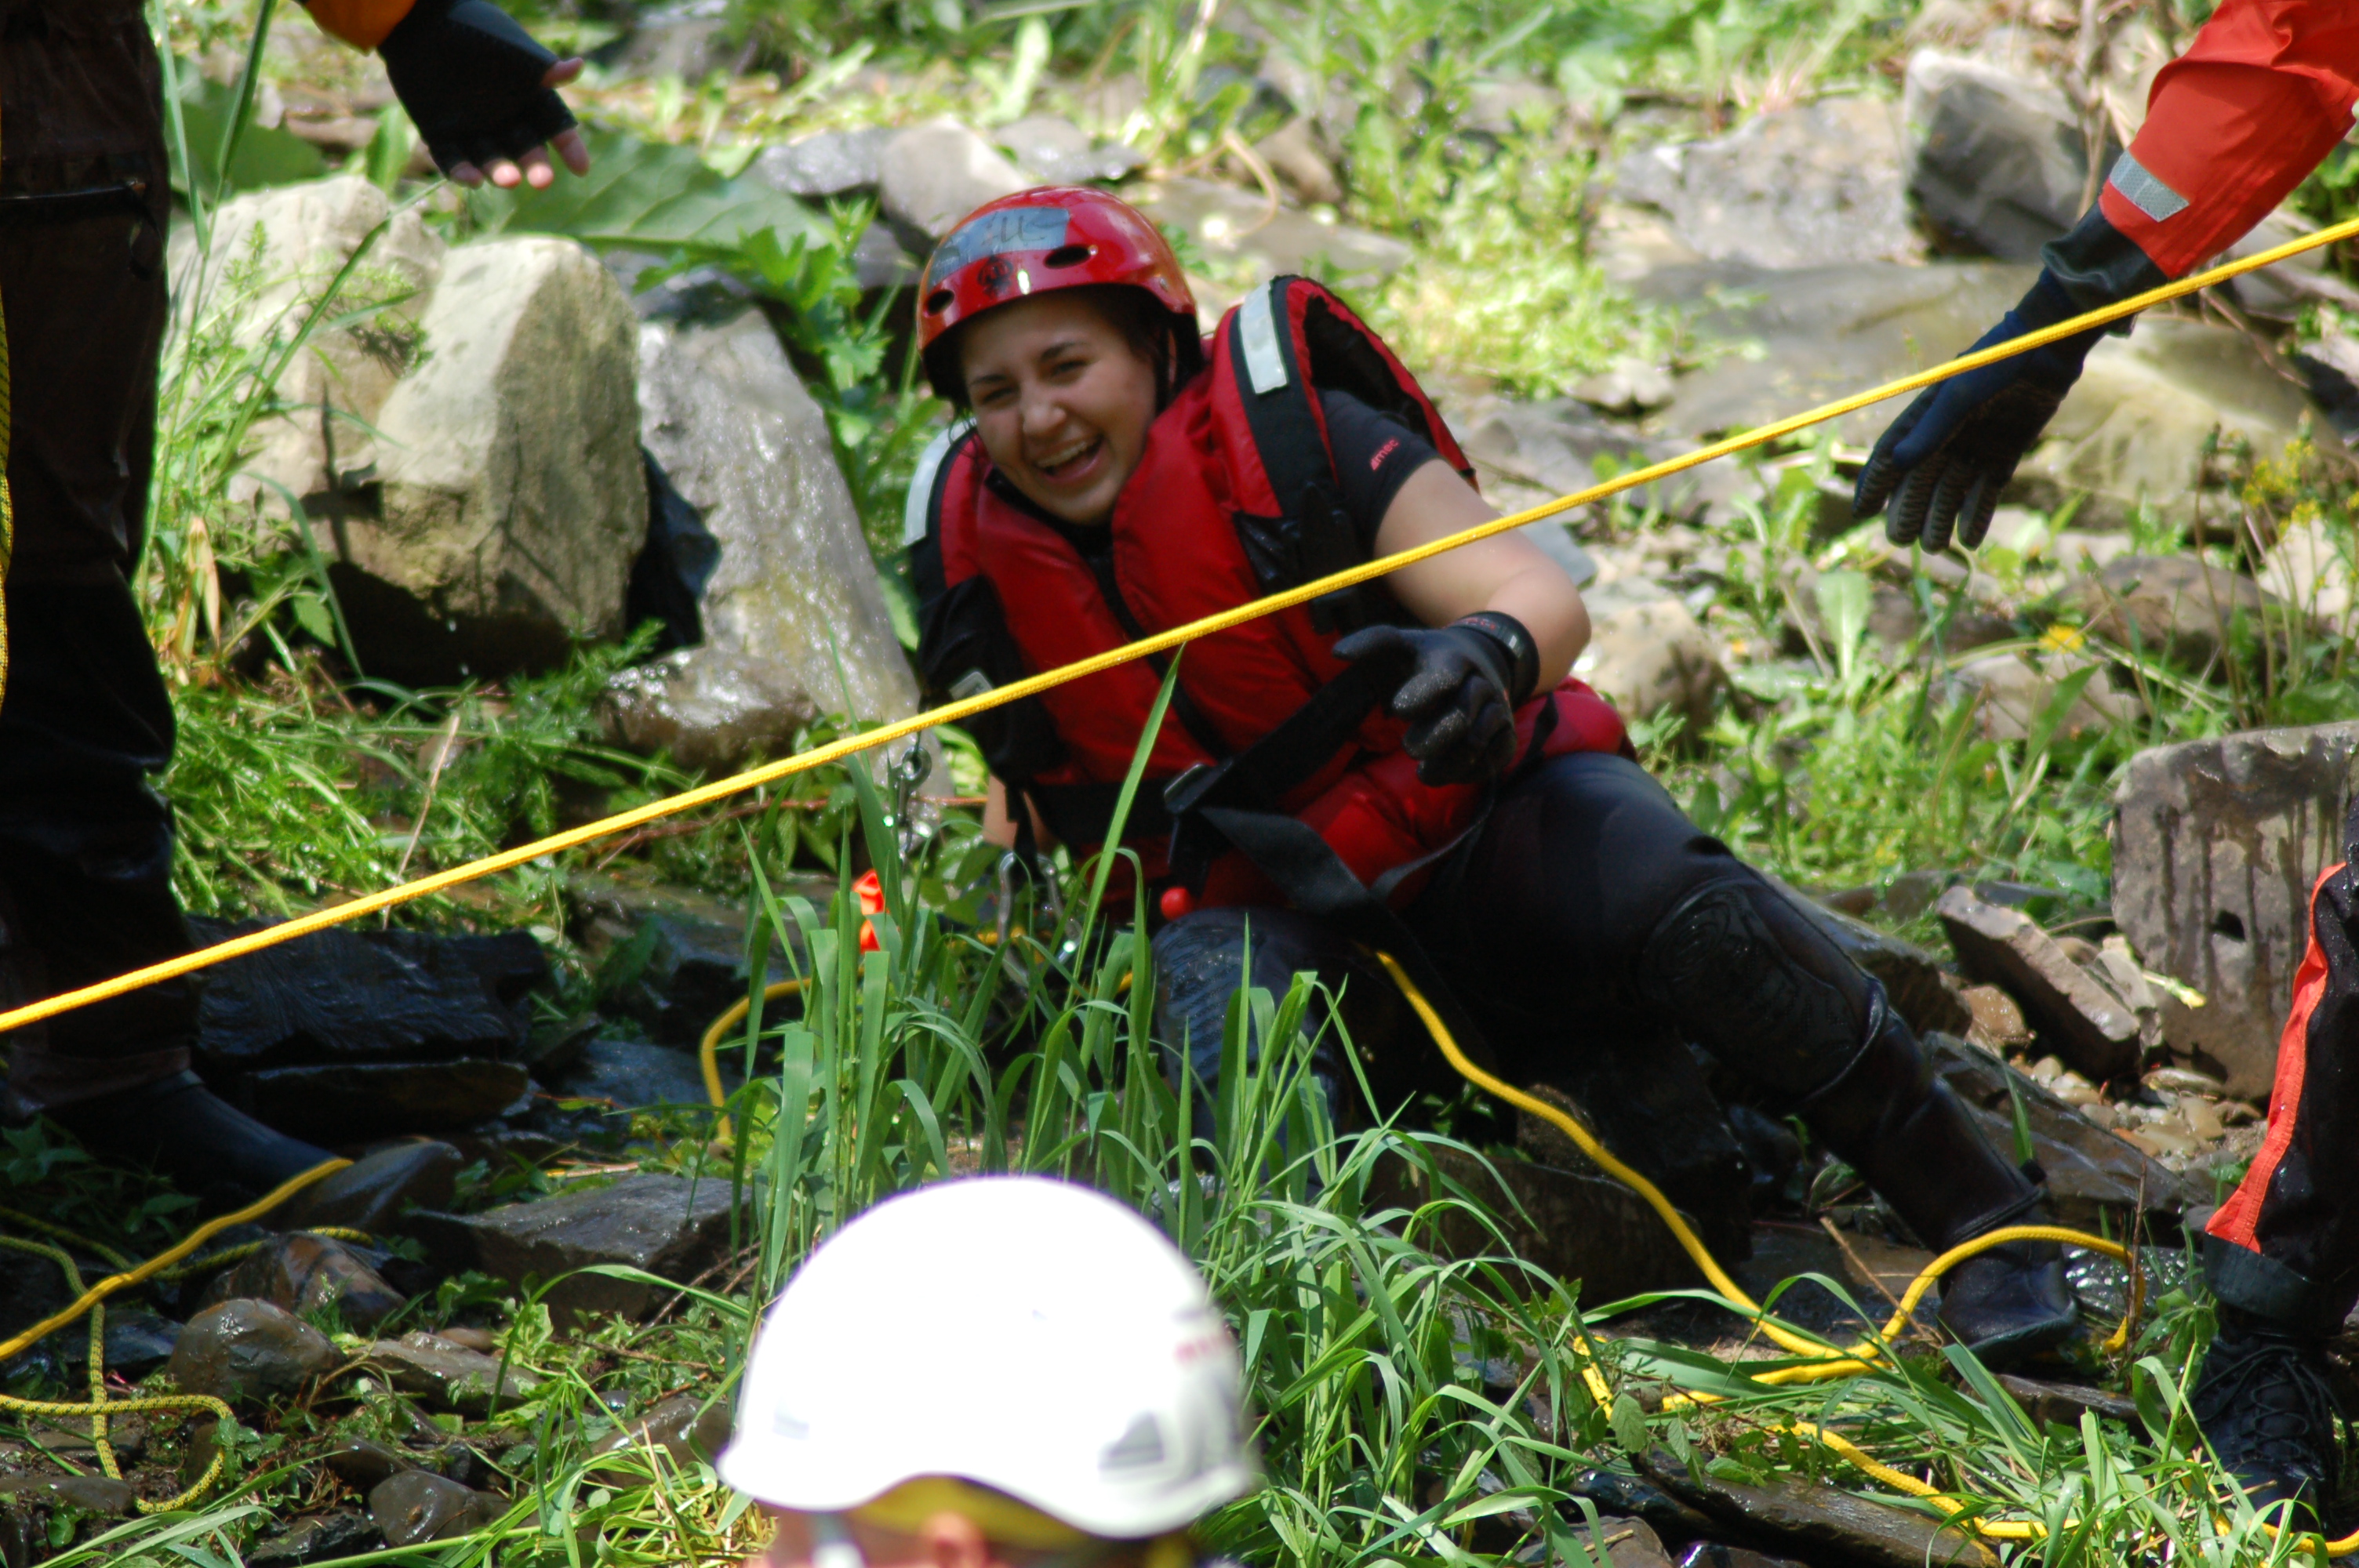 05-21-11  Training - Swift Water Rescue